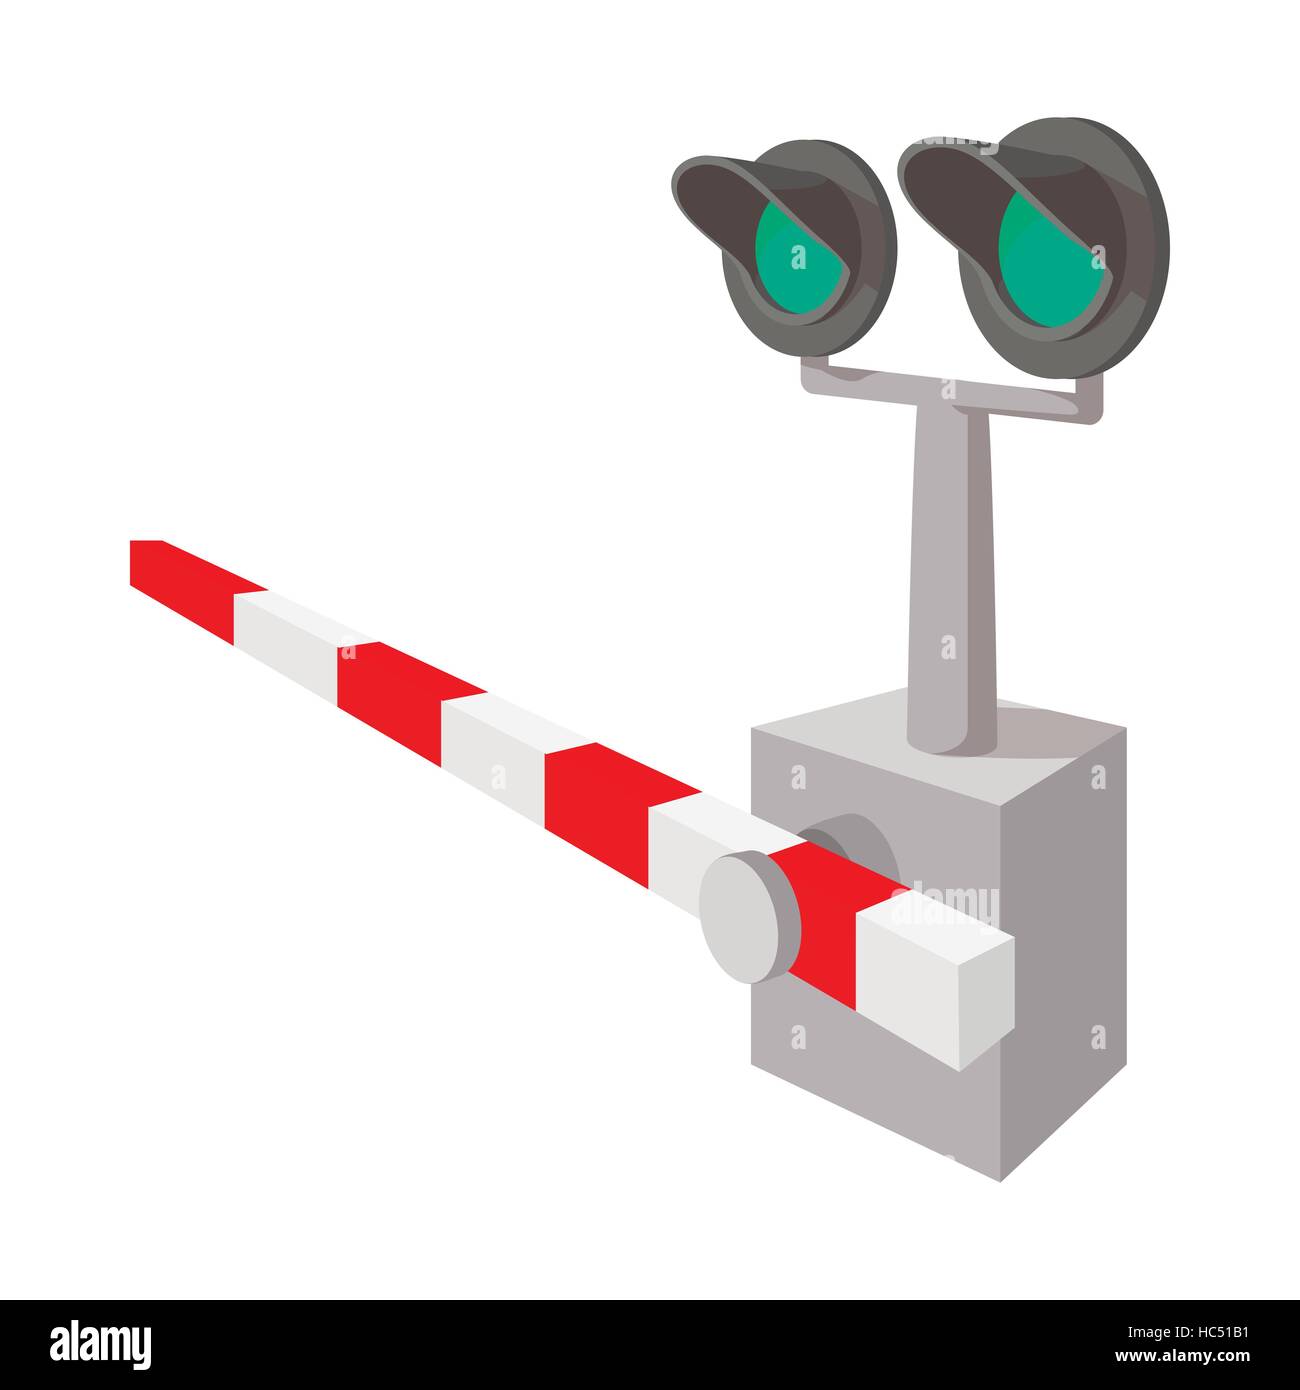 Railroad crossing sign cartoon icon Stock Vector